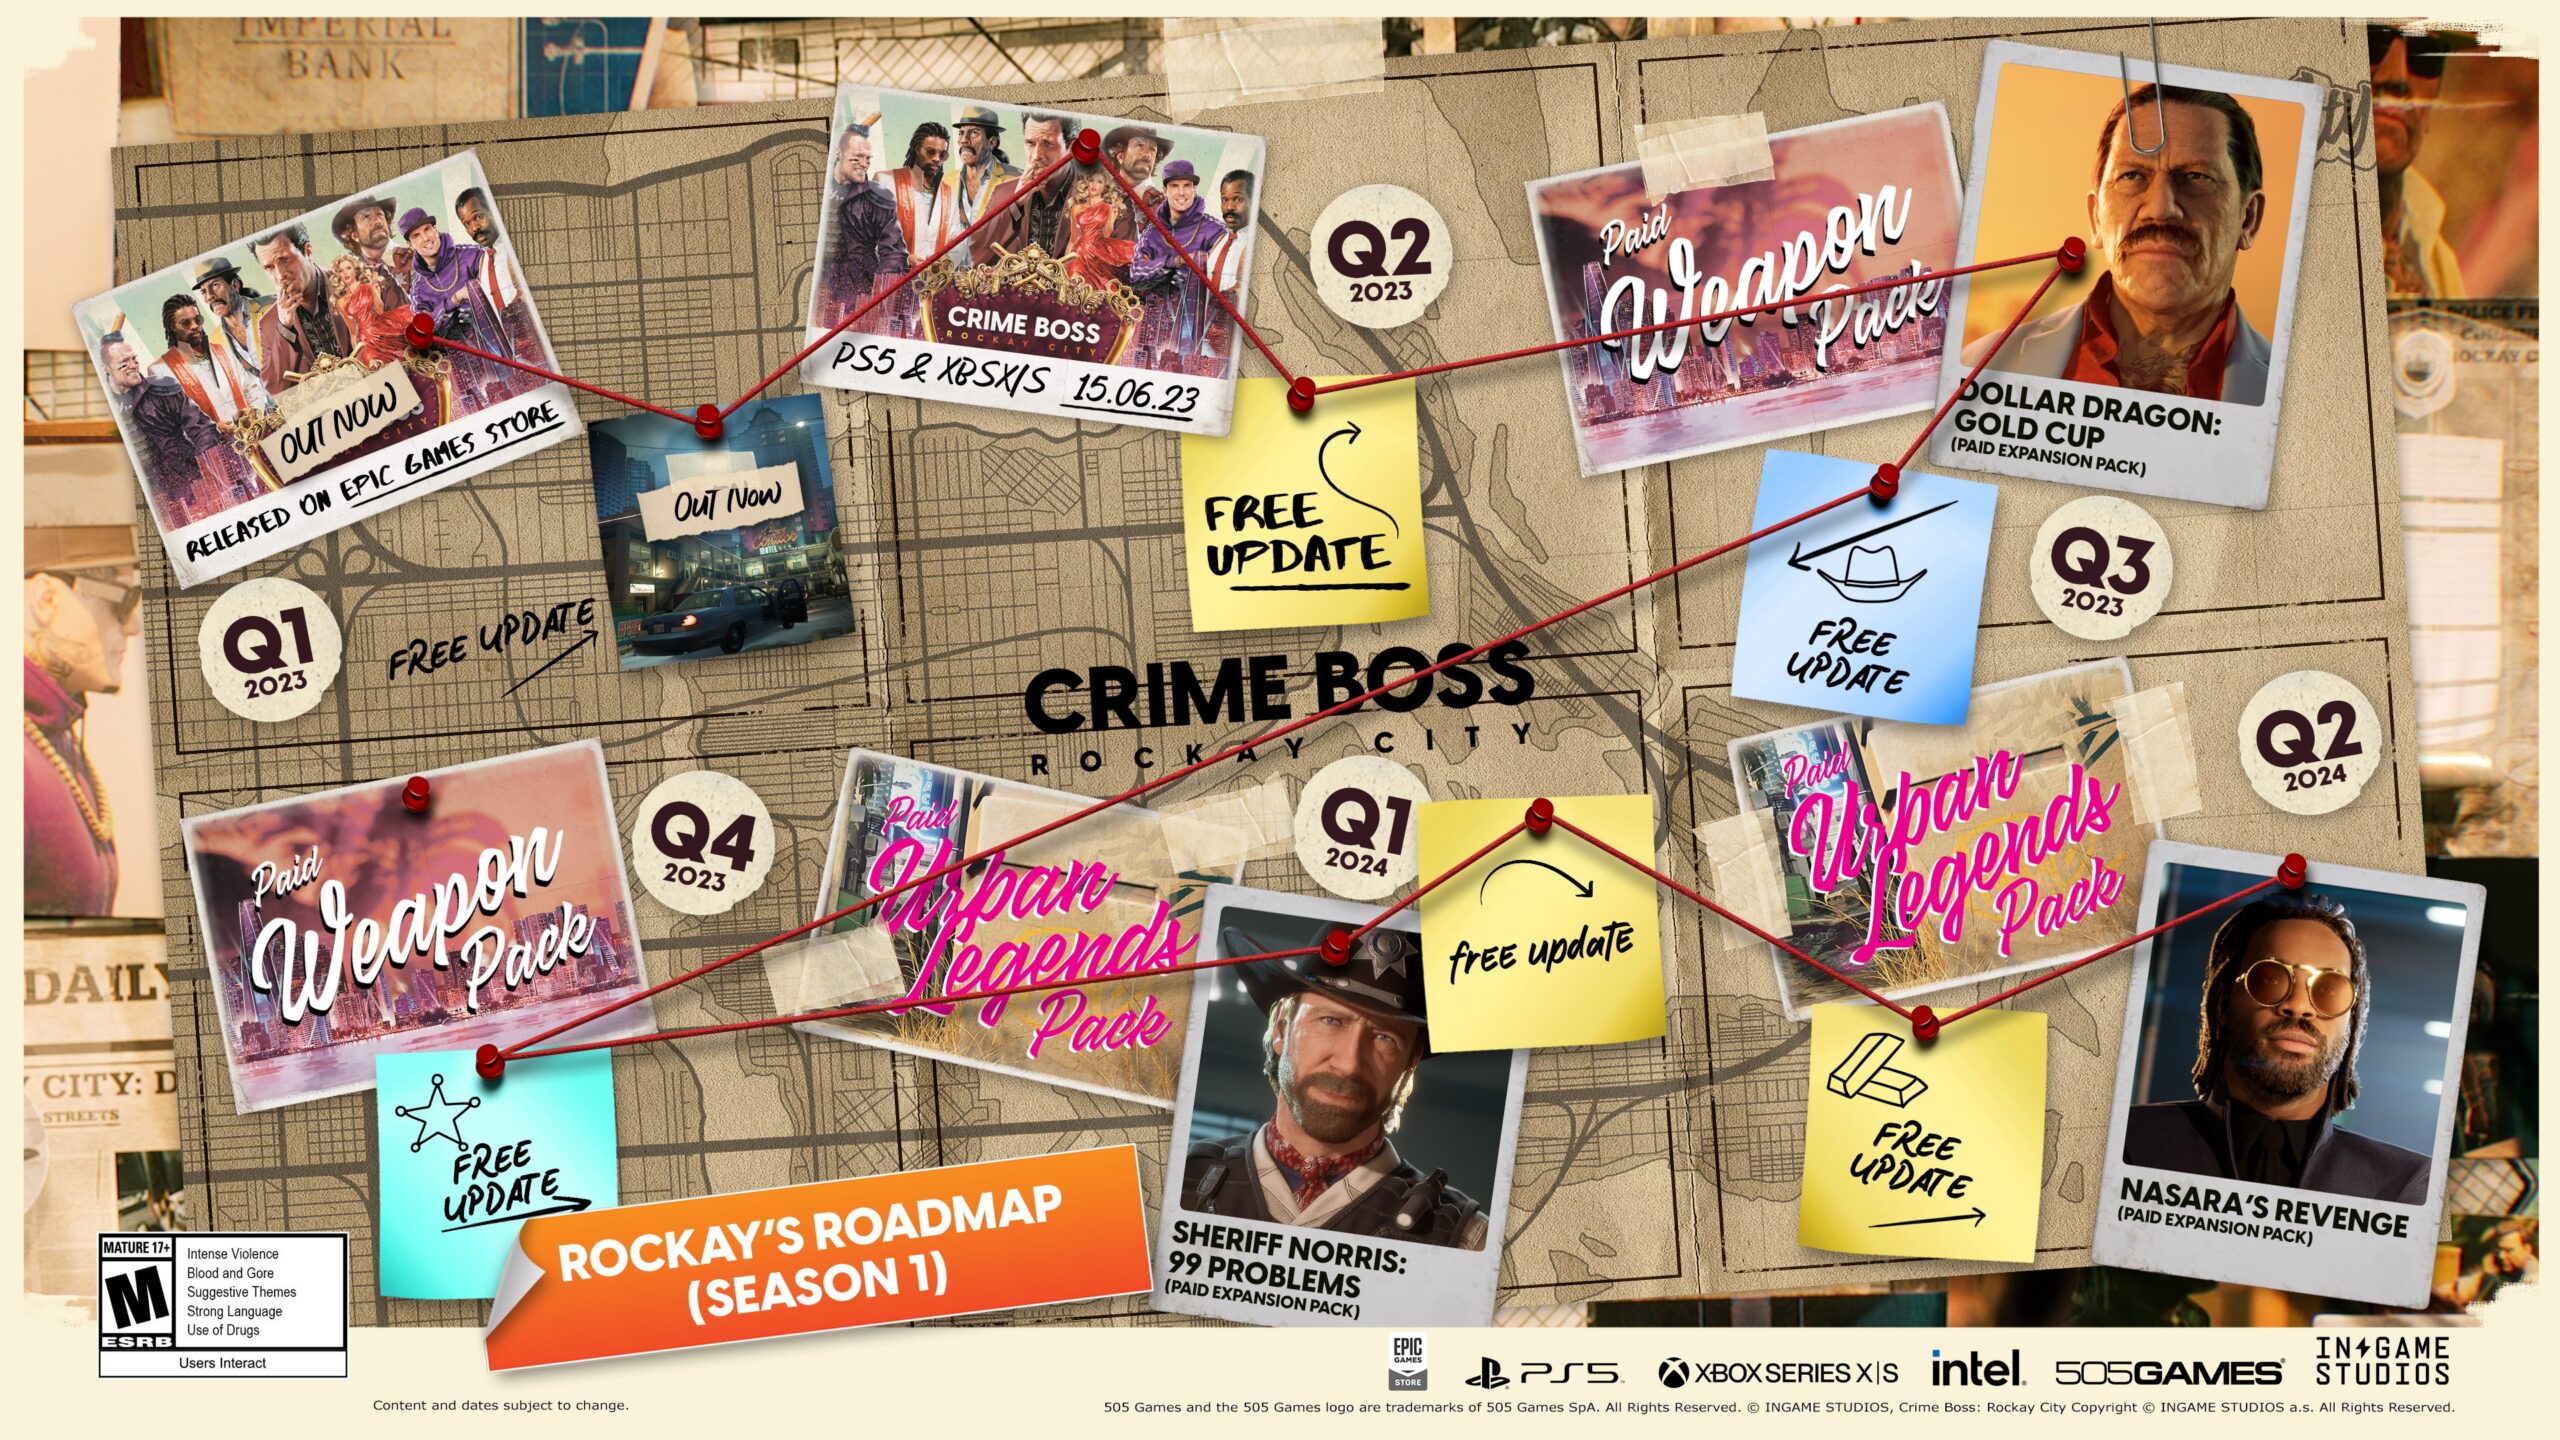 Crime Boss Rockay City roteiro conteudo